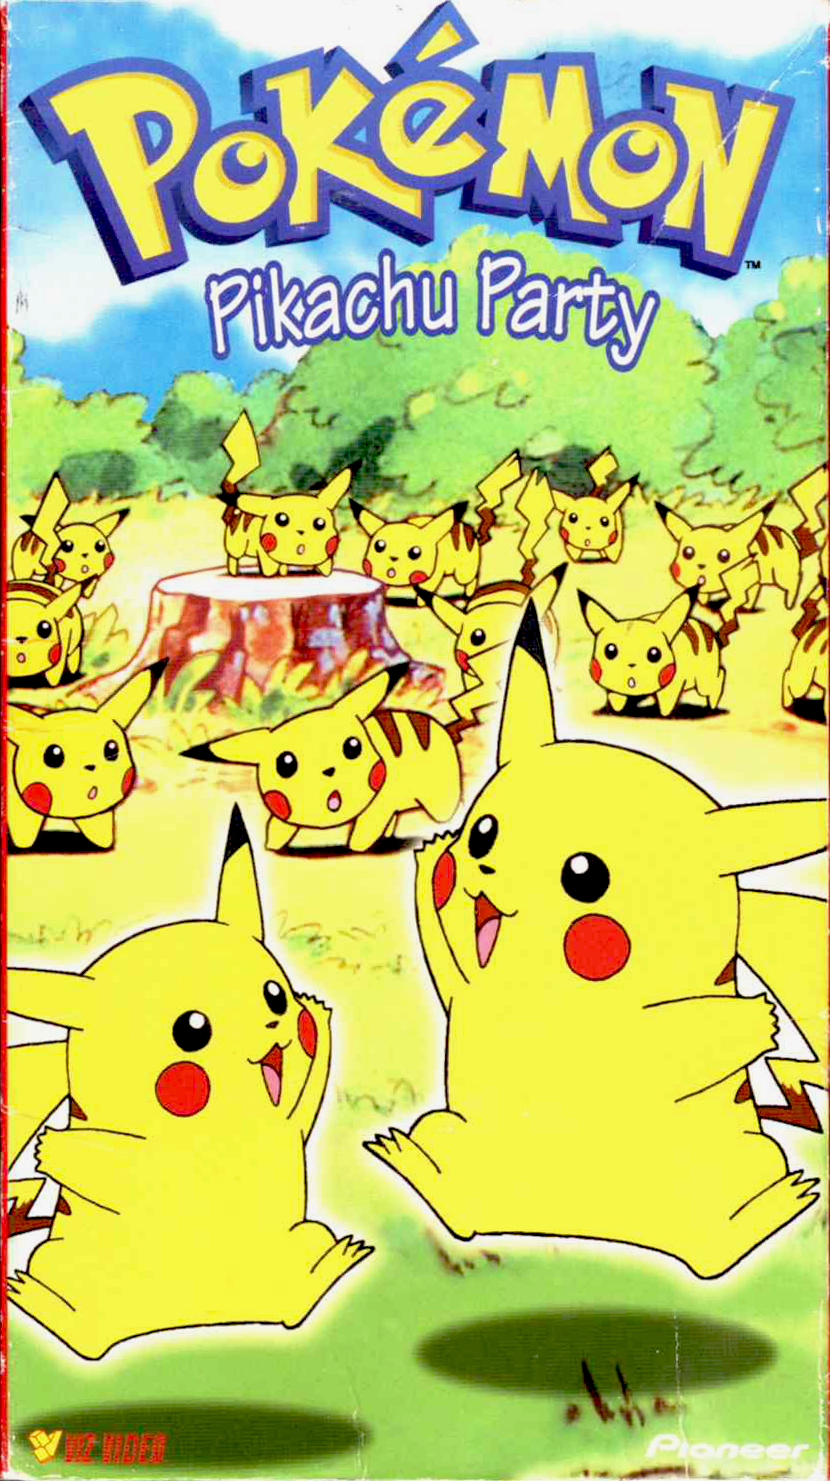 Pokemon: Pikachu Party VHS (1998)